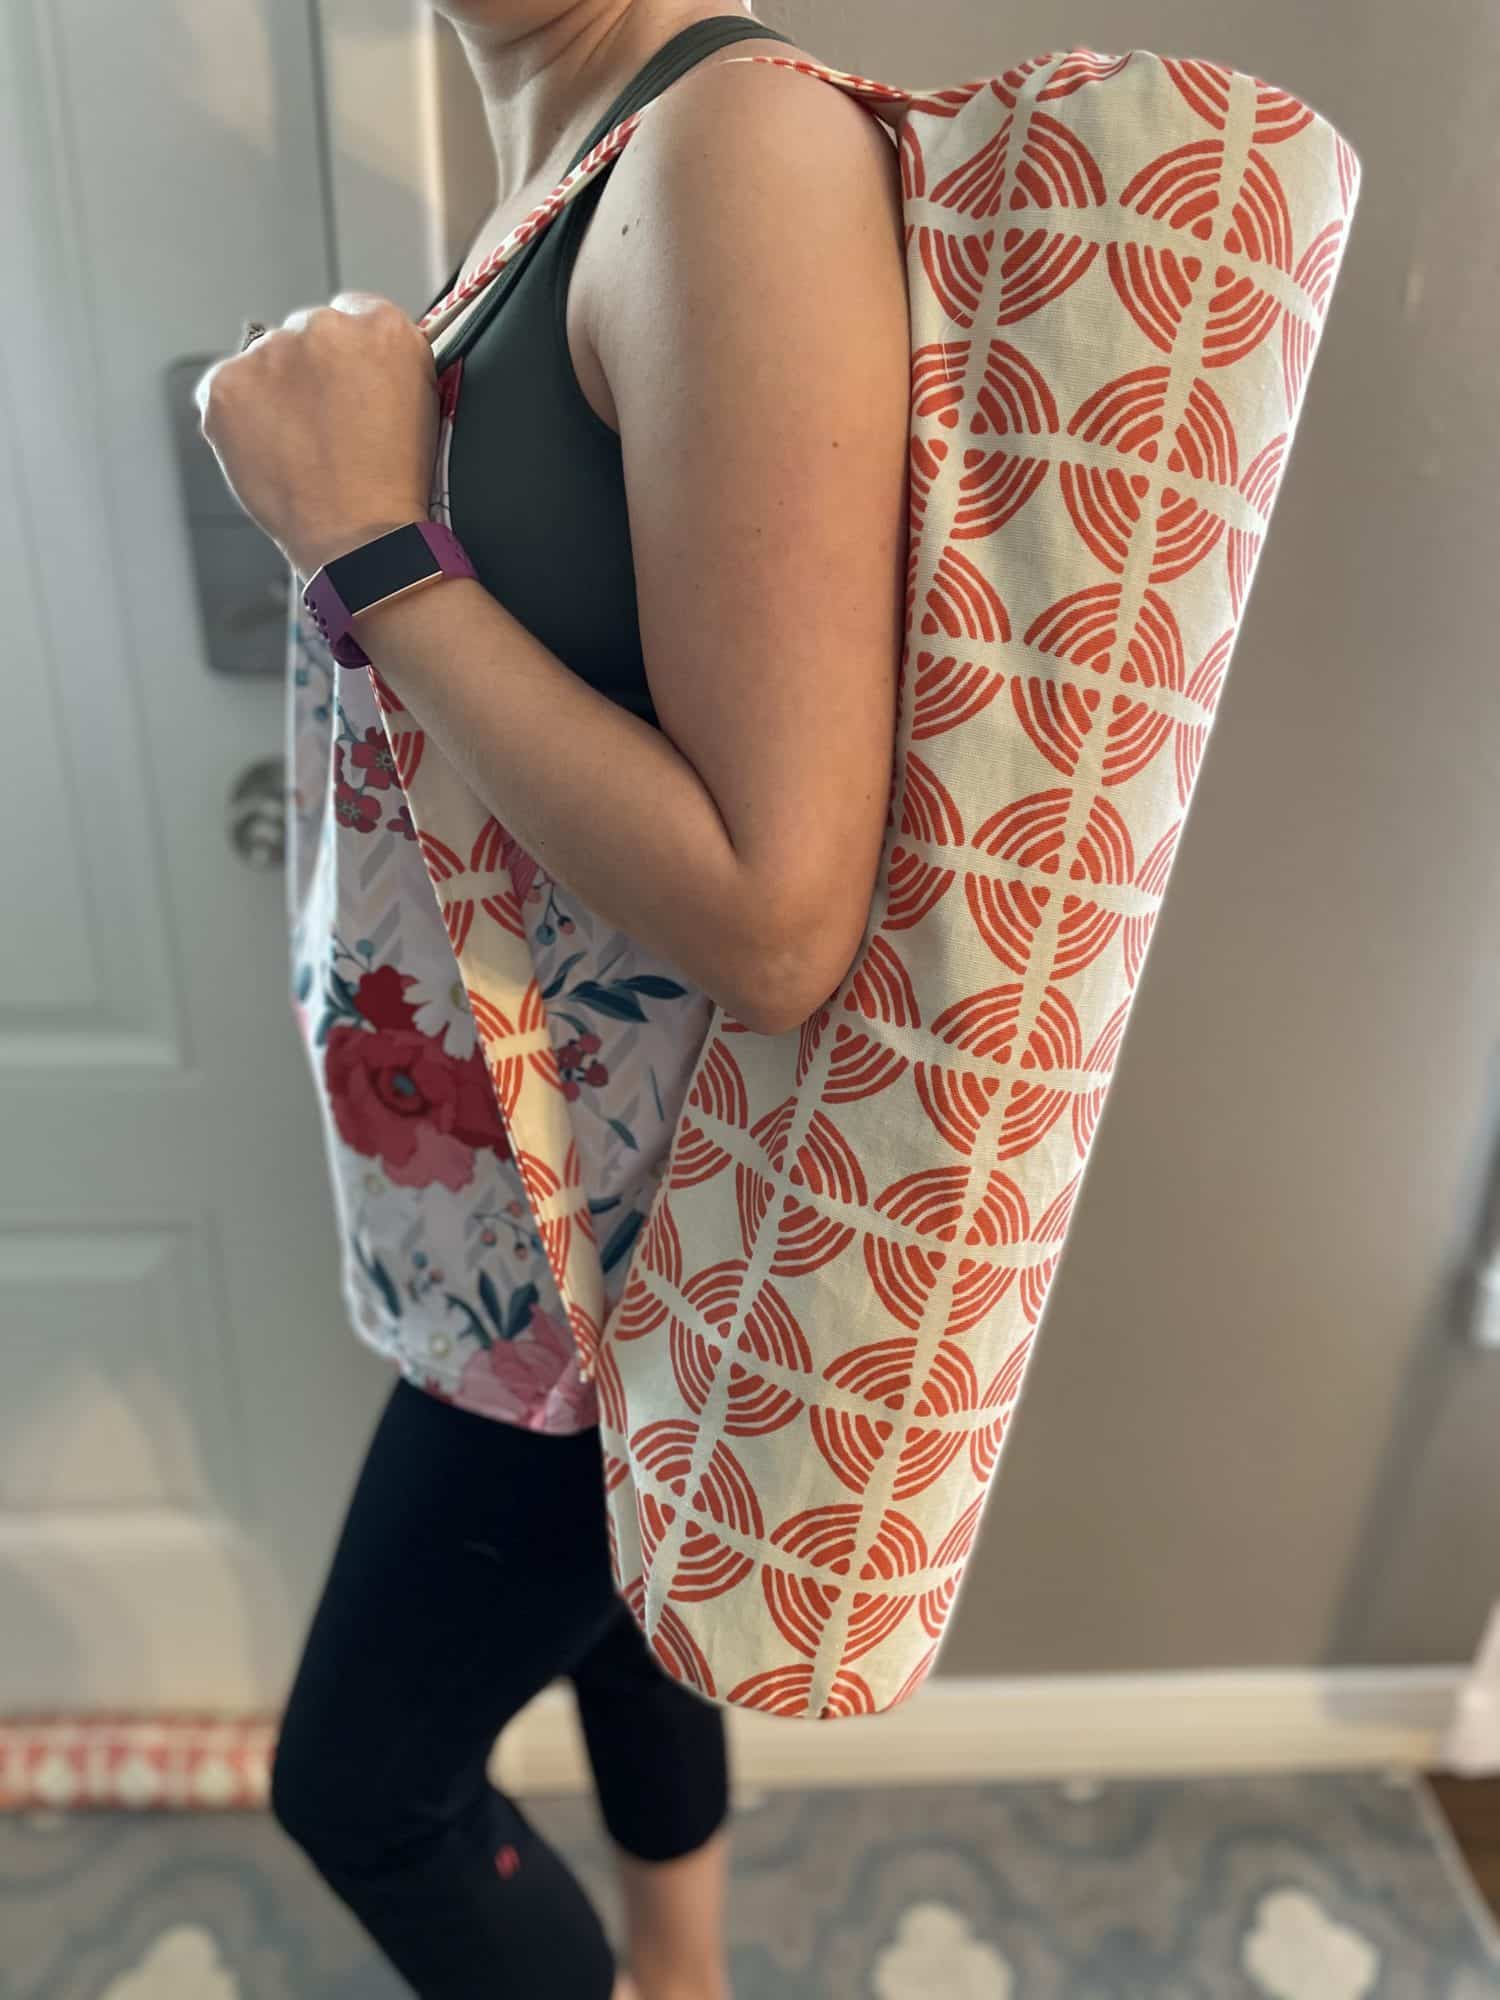 How to Make a Yoga Mat Bag 